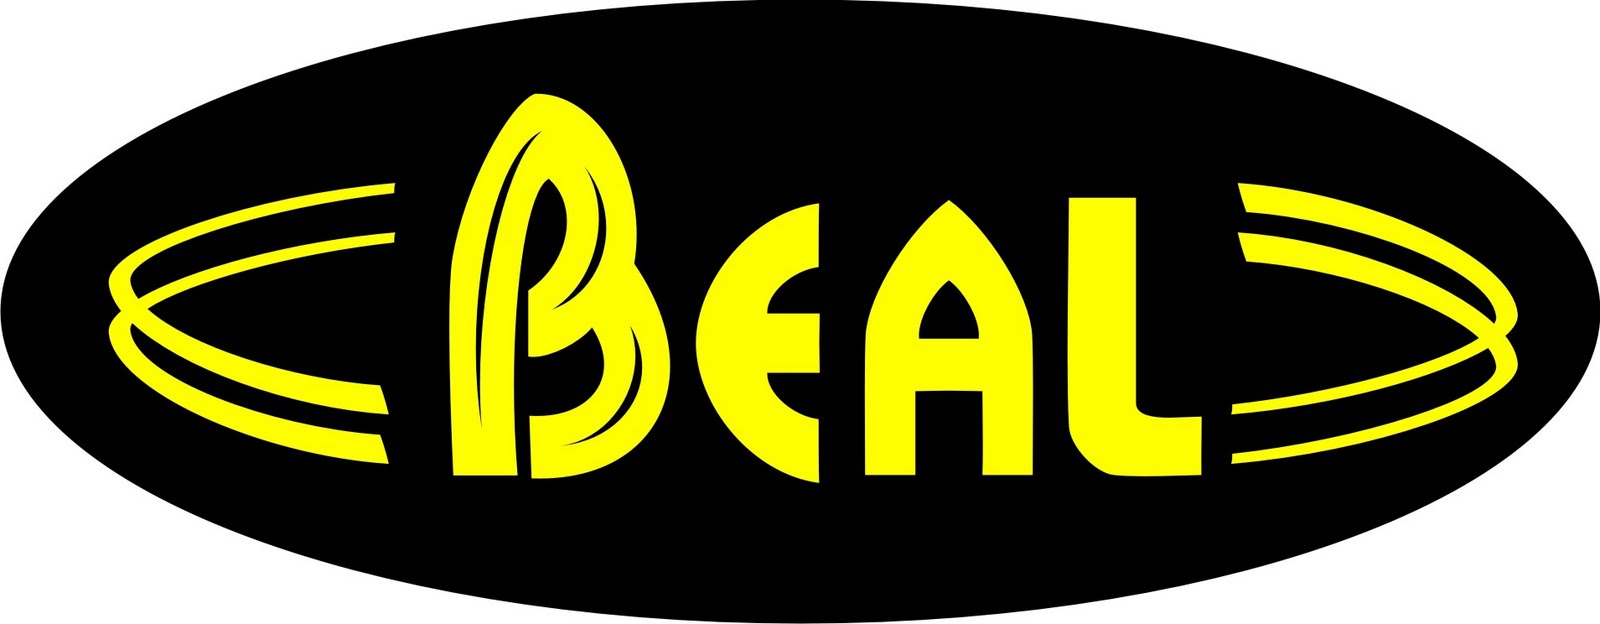 Beal Logo photo - 1